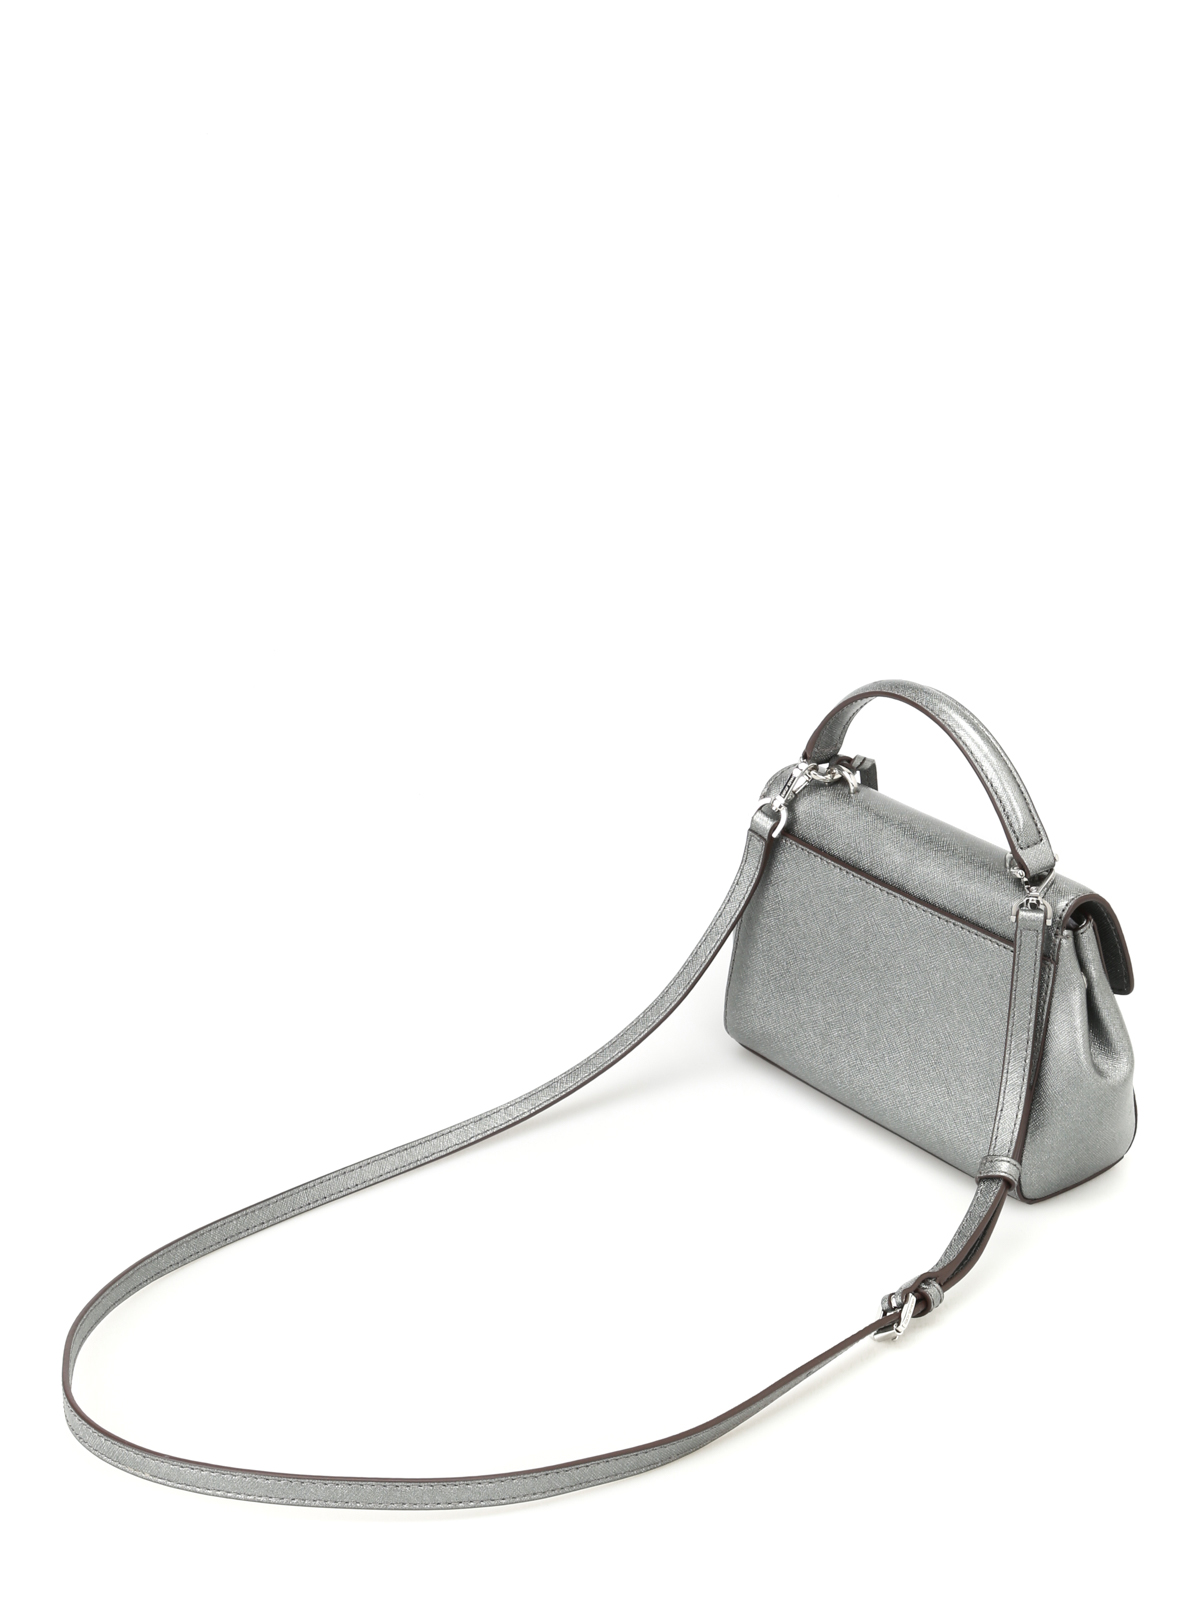 Michael Kors Silver Saffiano Leather Small Ava Top Handle Bag Michael Kors